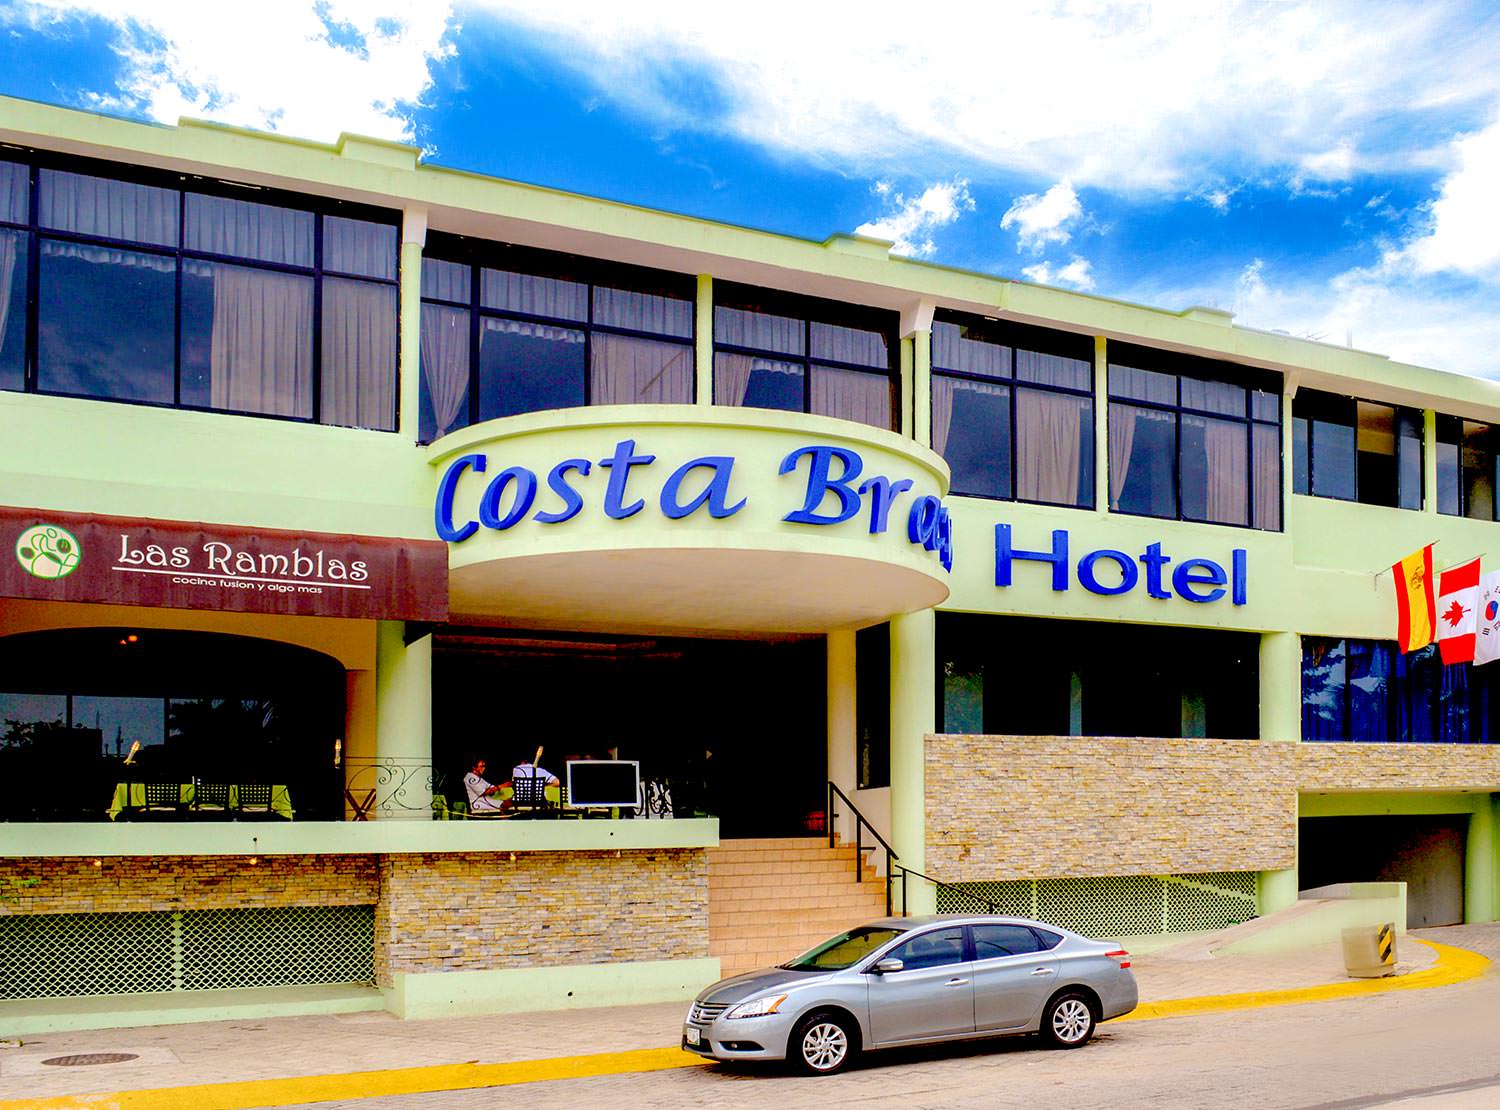 Hotel Costa Brava